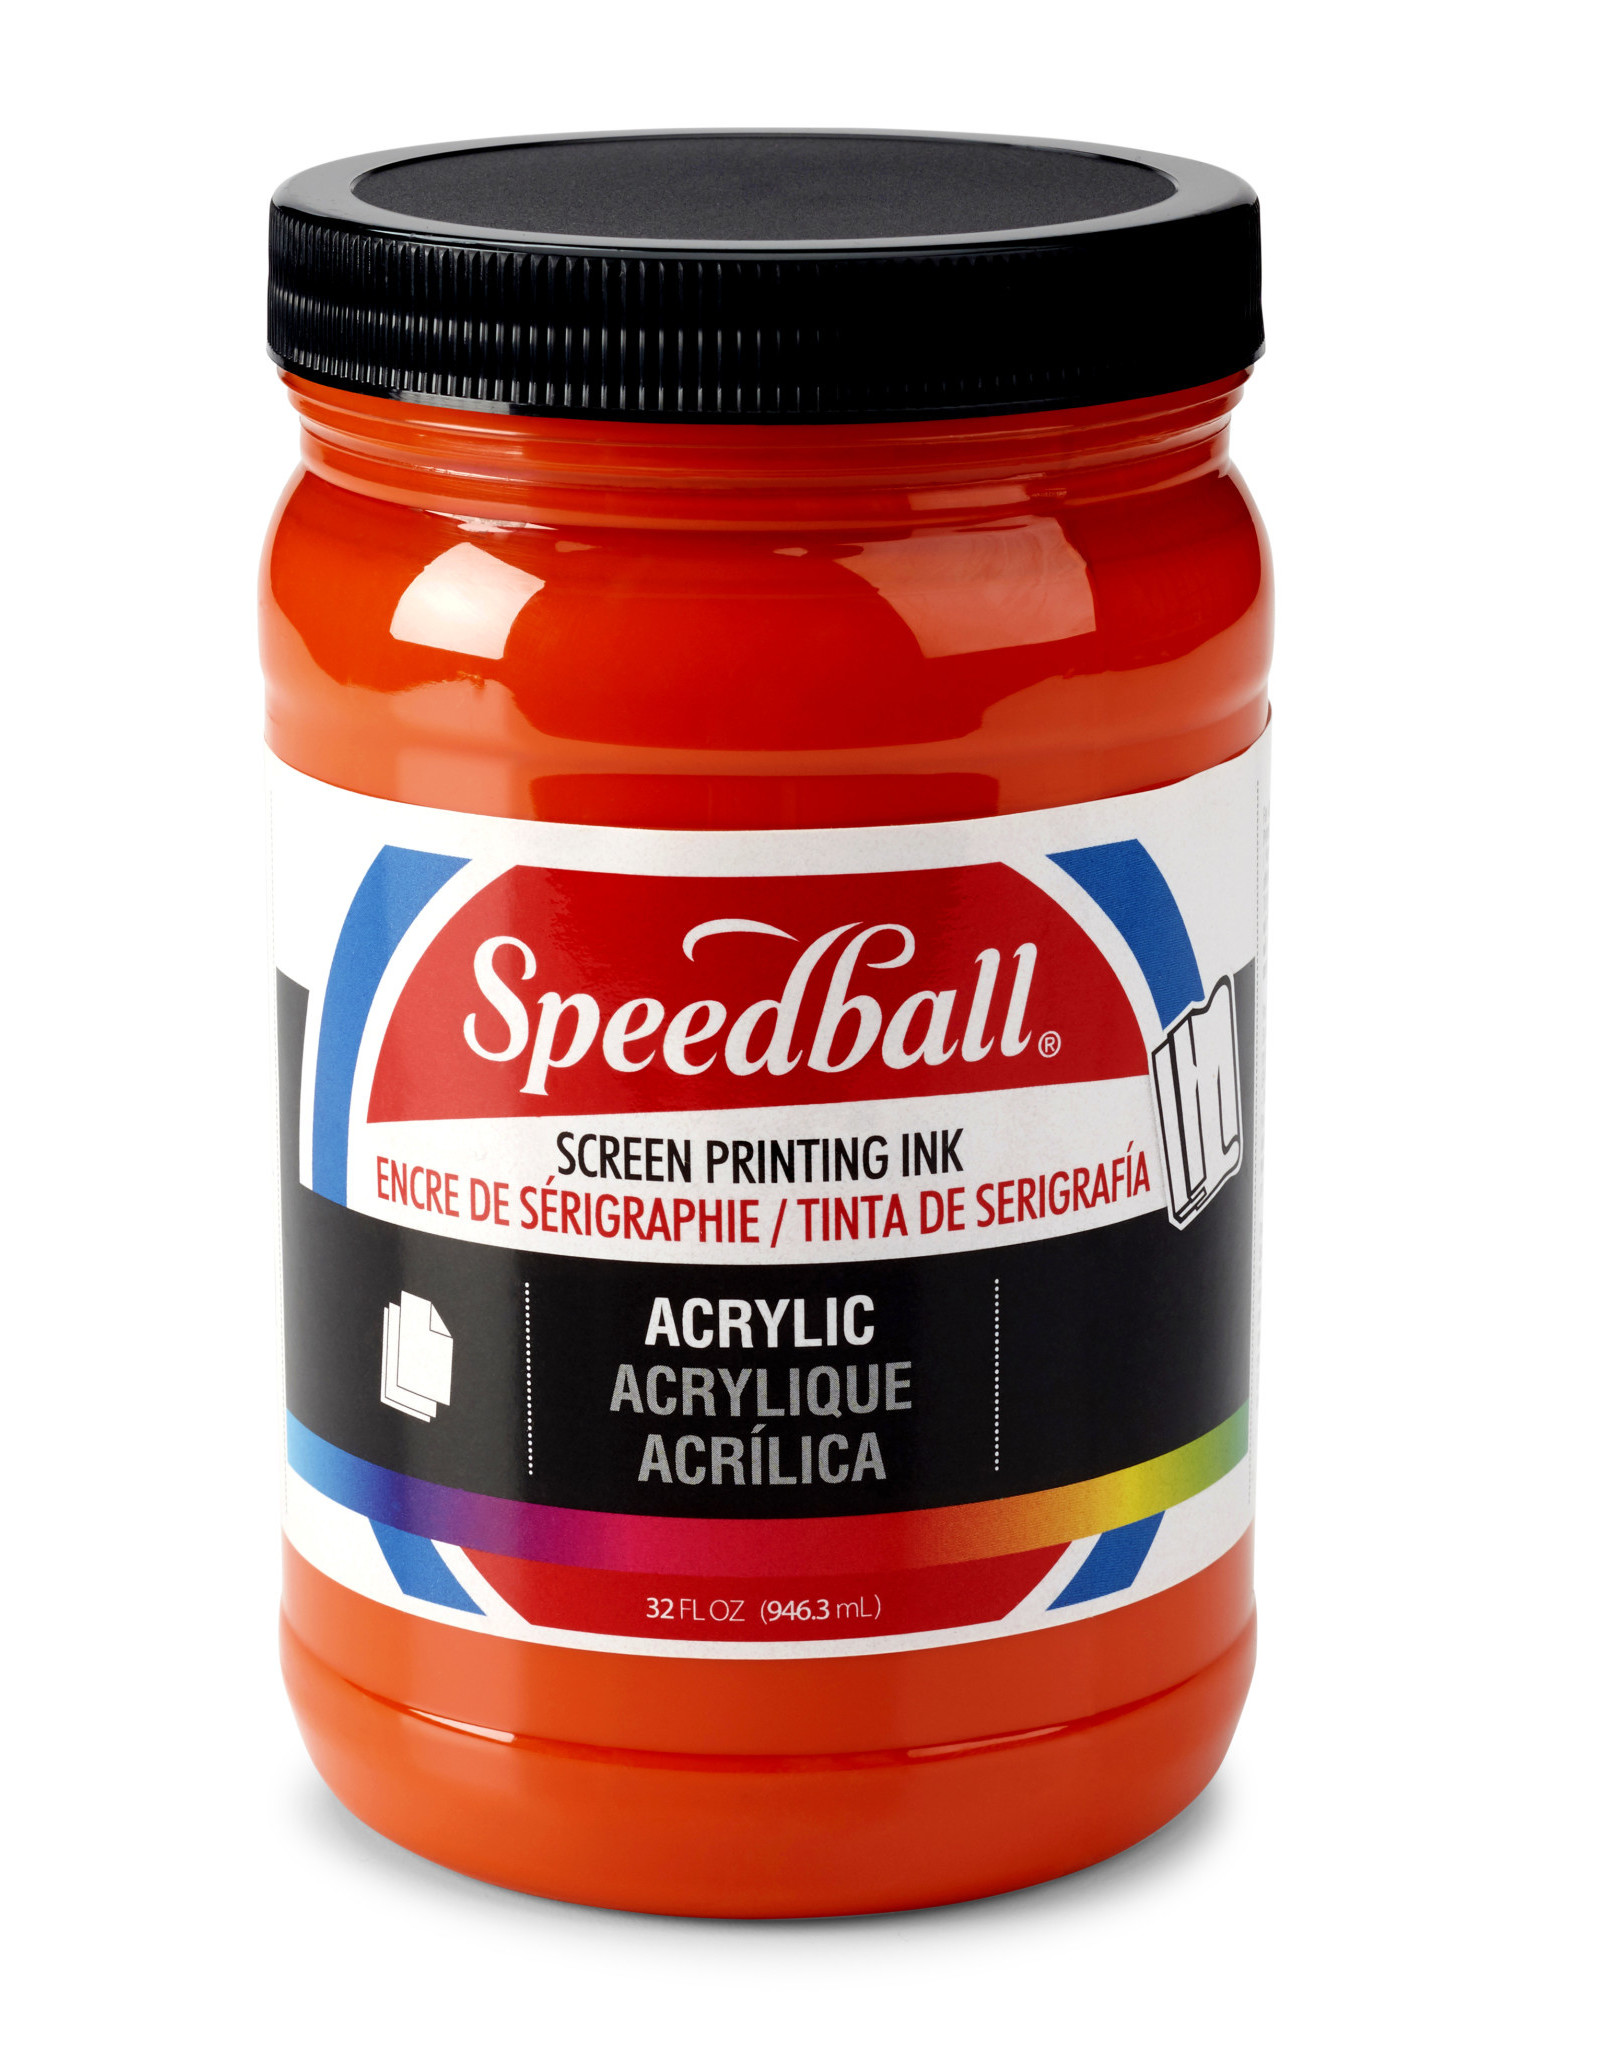 SPEEDBALL ART PRODUCTS Speedball Acrylic Screen Printing Ink, Orange, 32oz